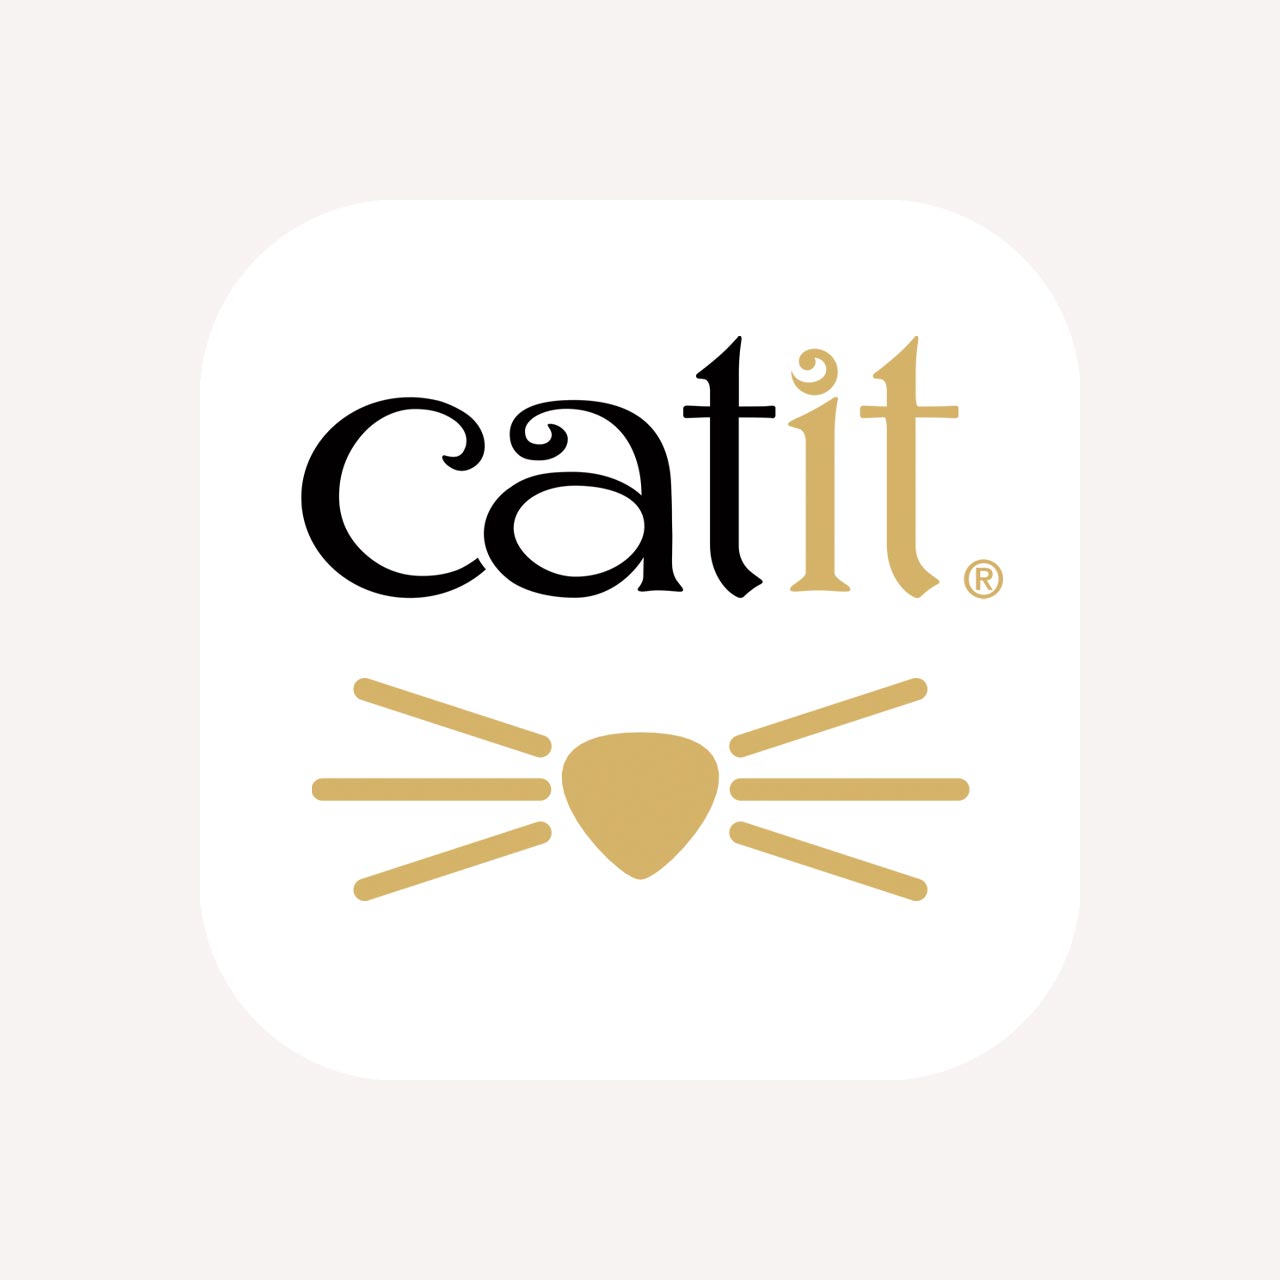 Catit app logo